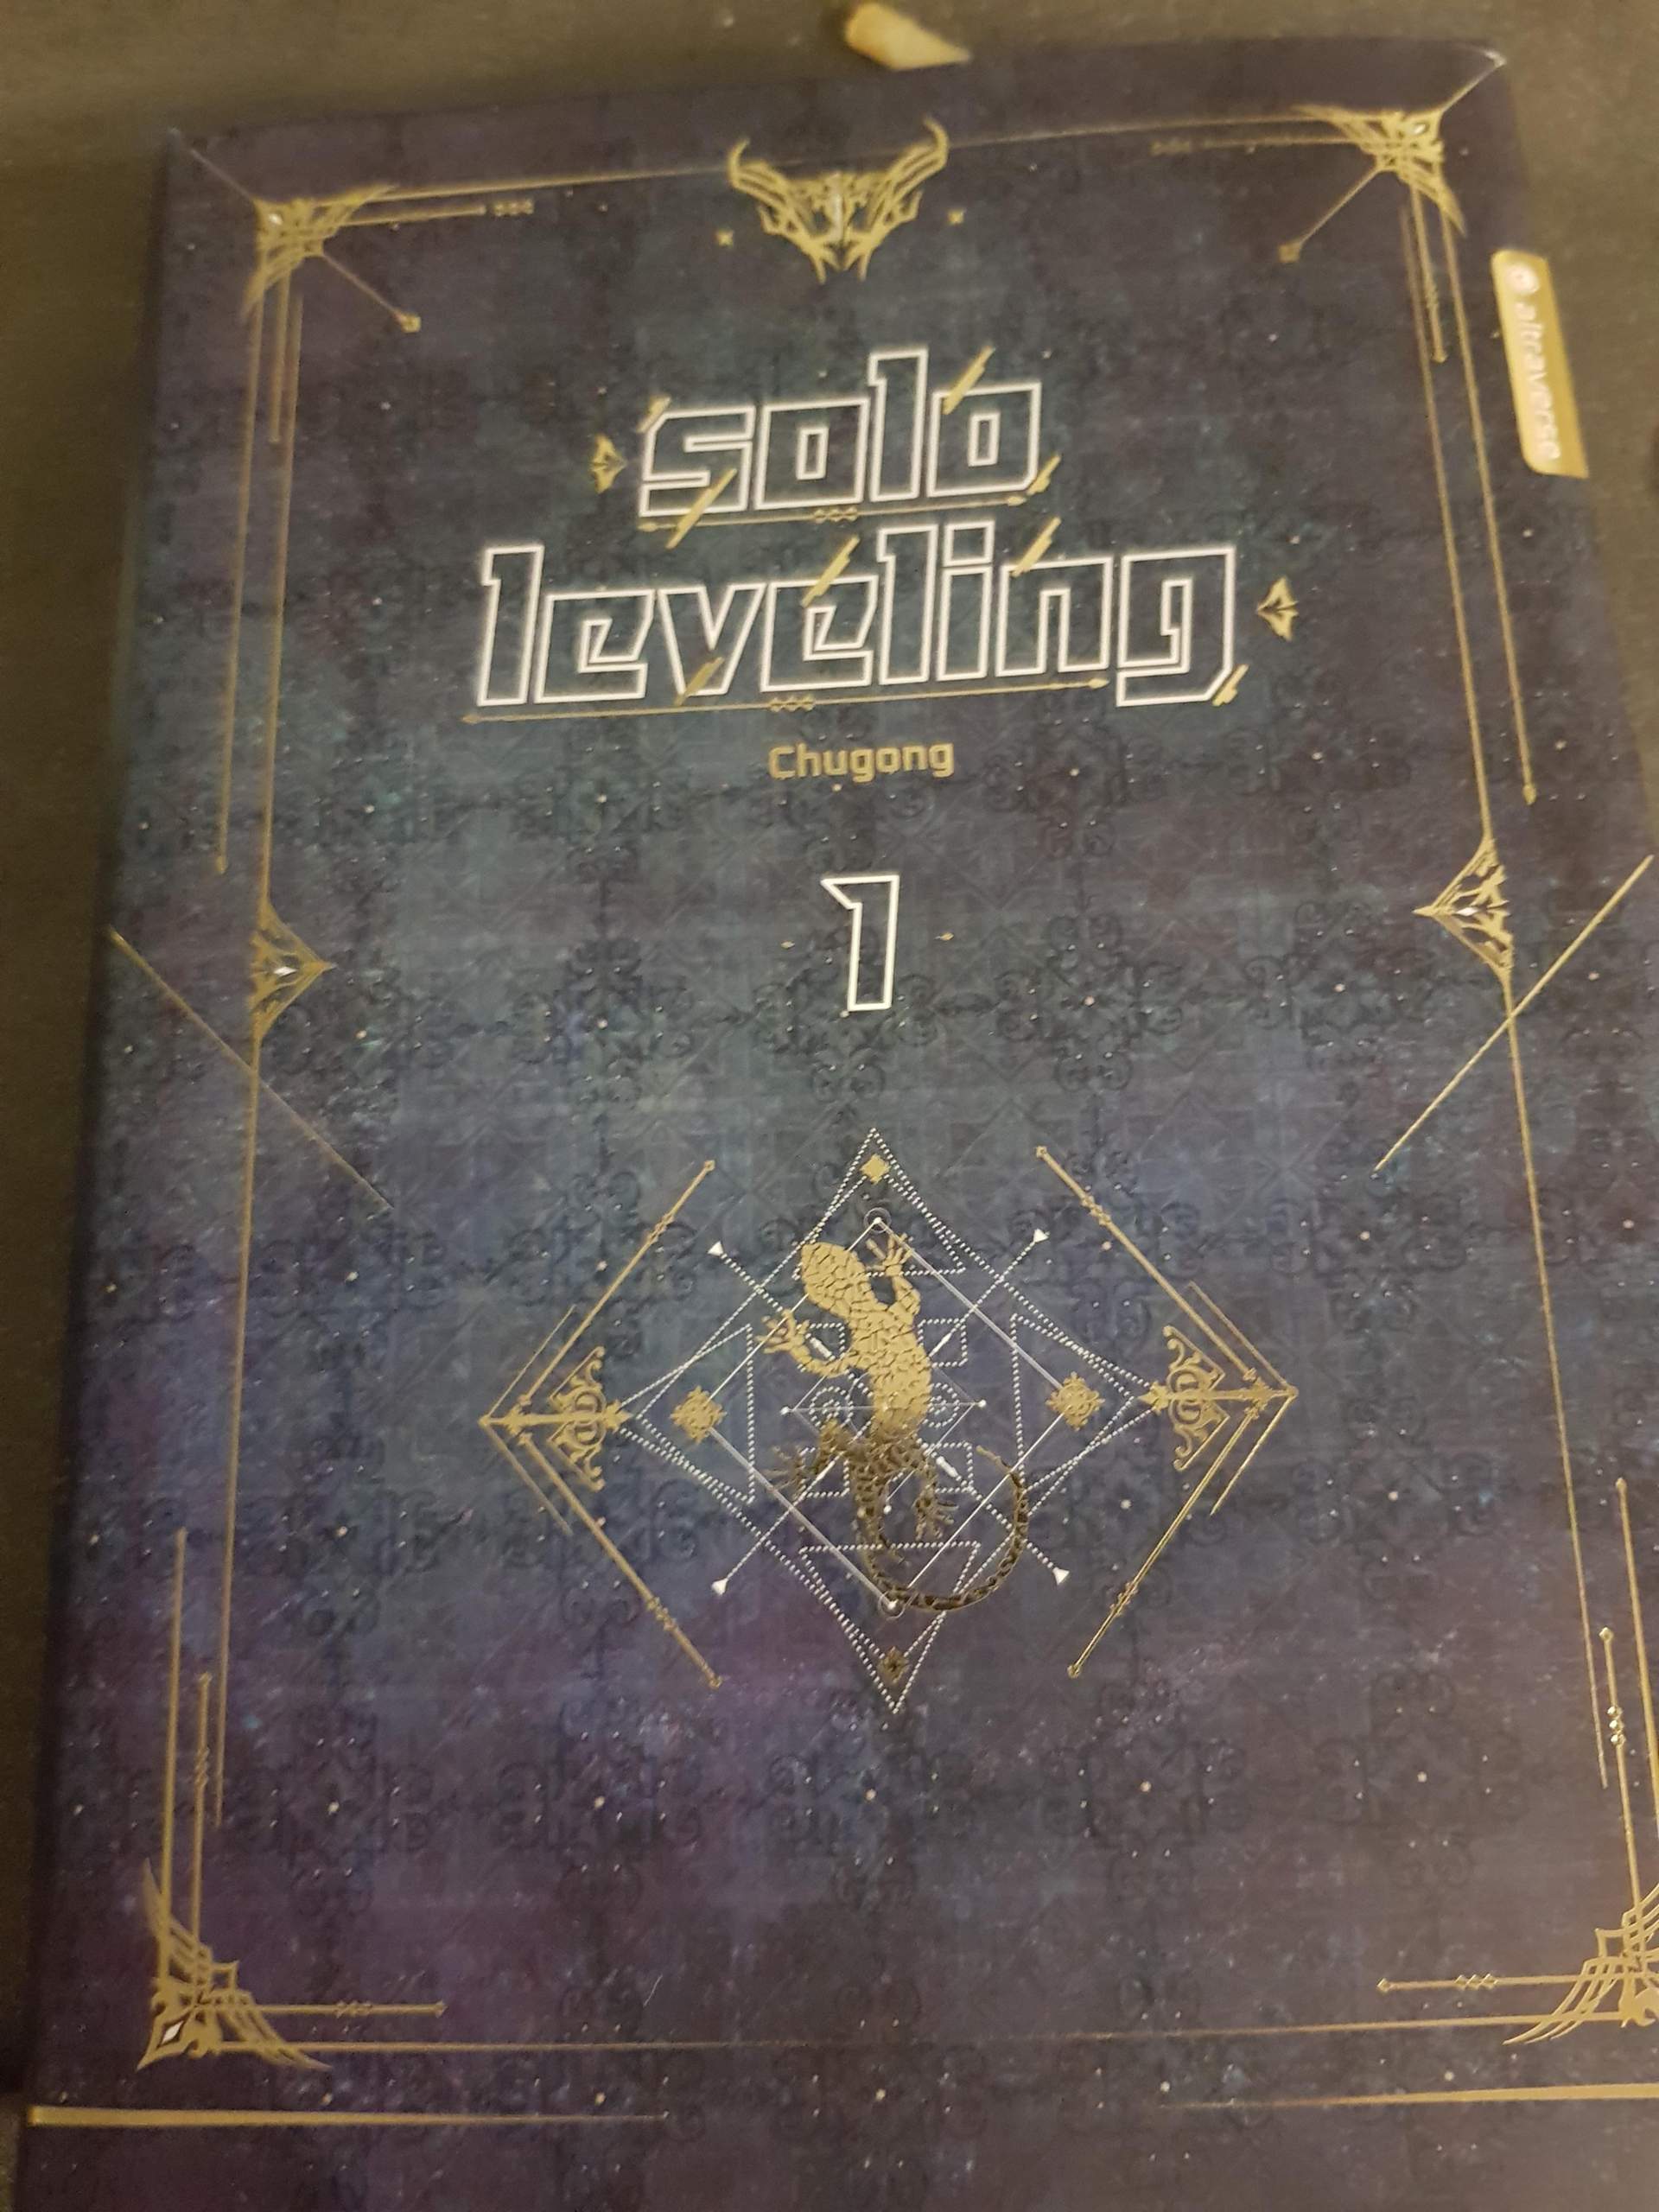 solo leveling light novel 5